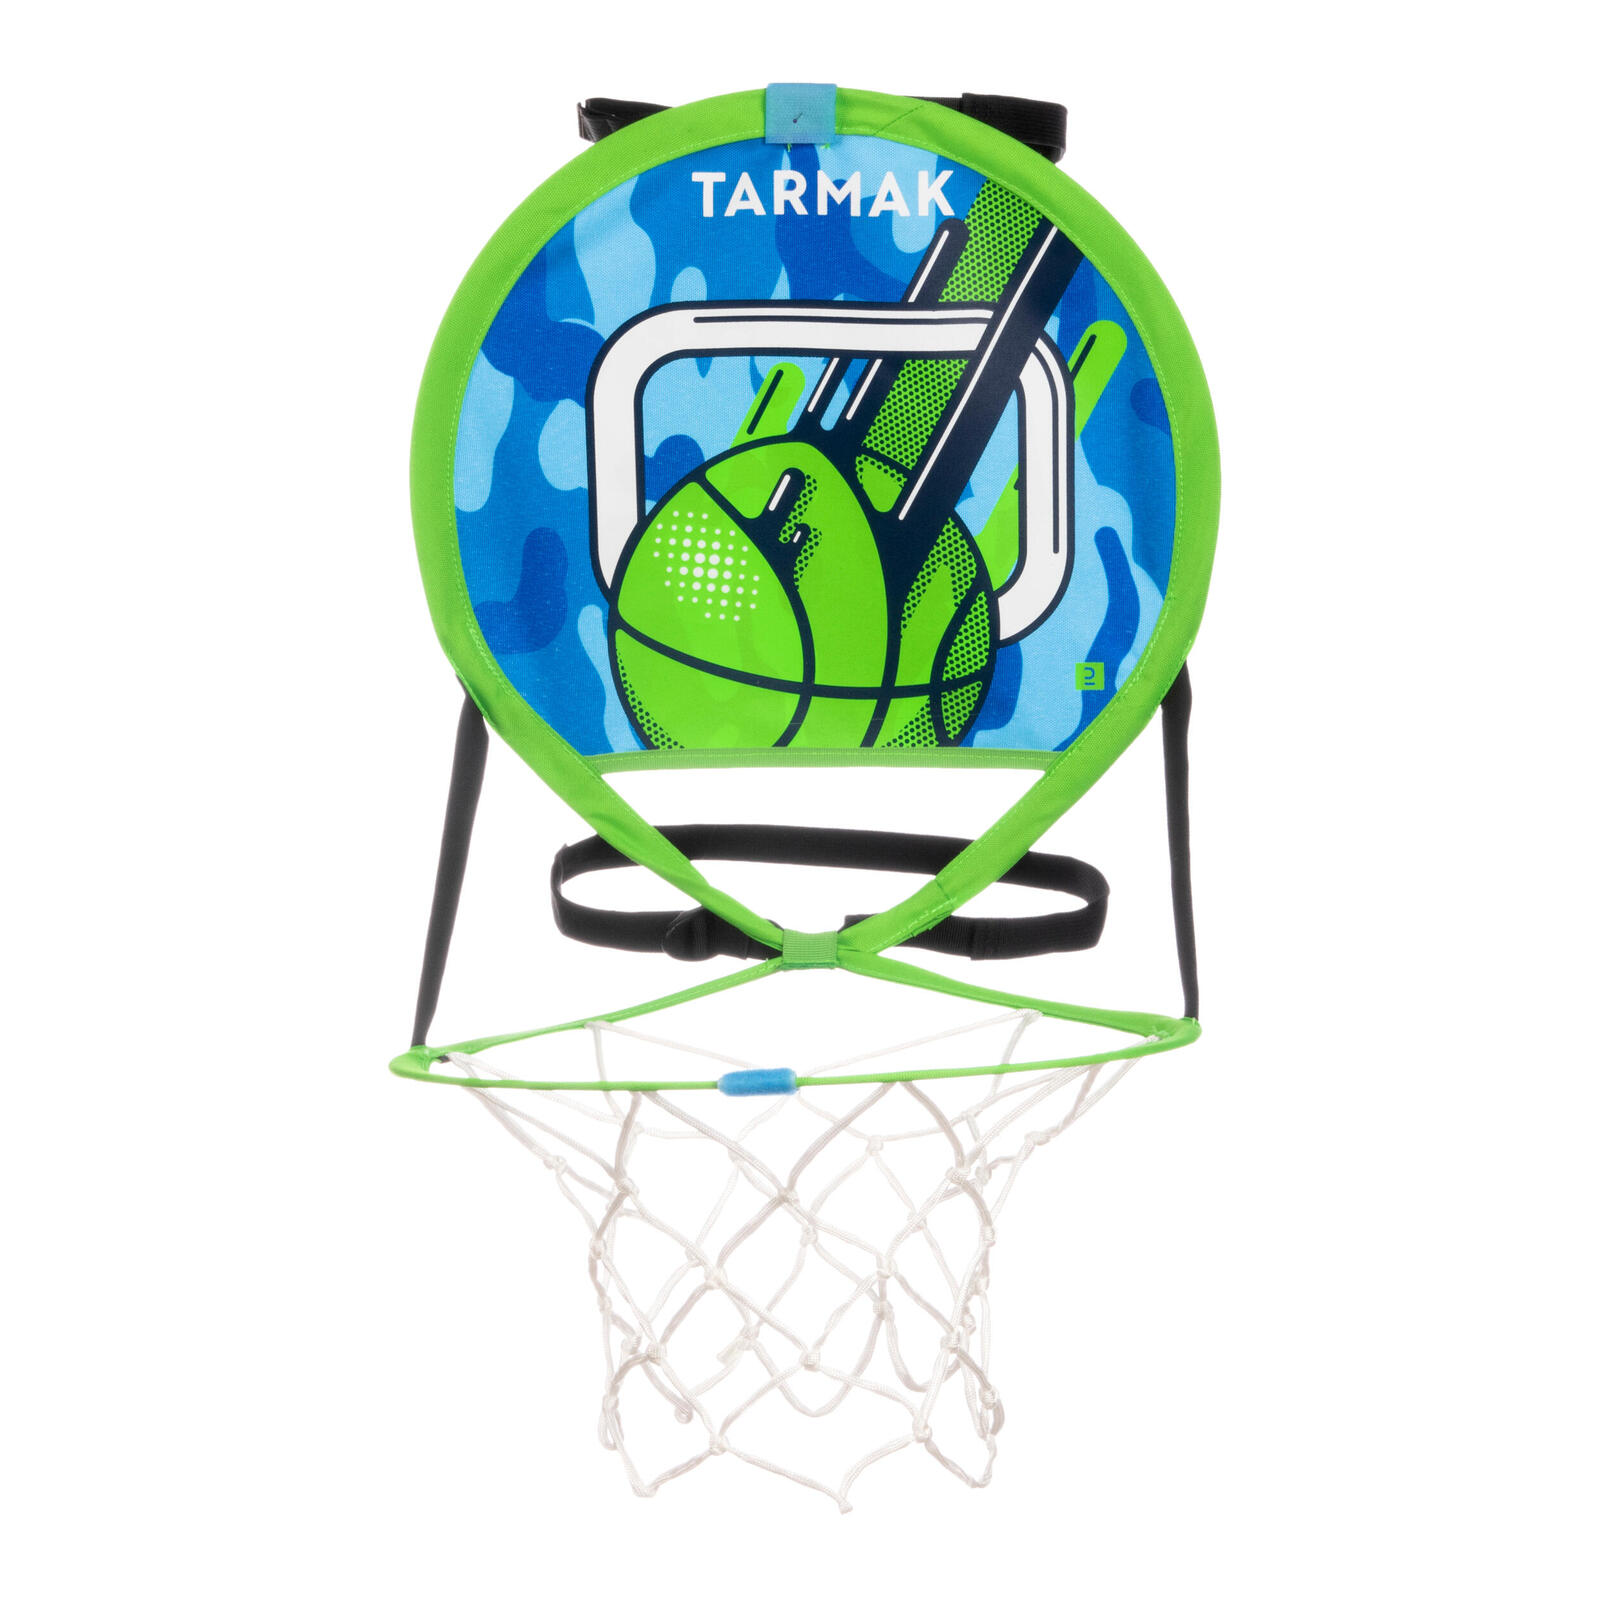 Kids / adult mobile basketball basket with ball hoop 100 - green/blue